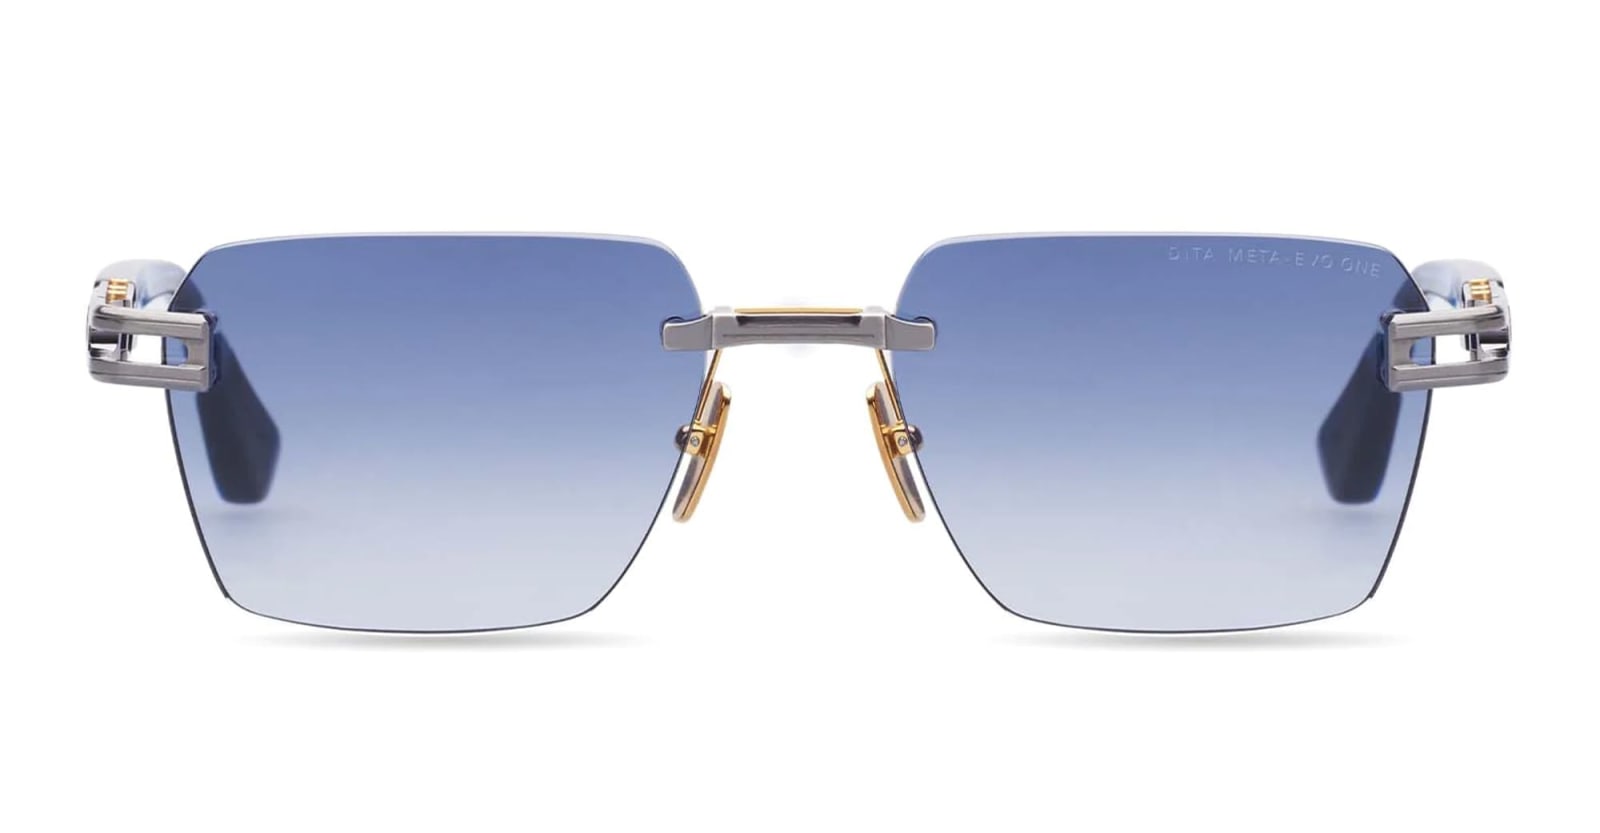 Meta-evo One - Antique Silver / Blue Swirl Sunglasses